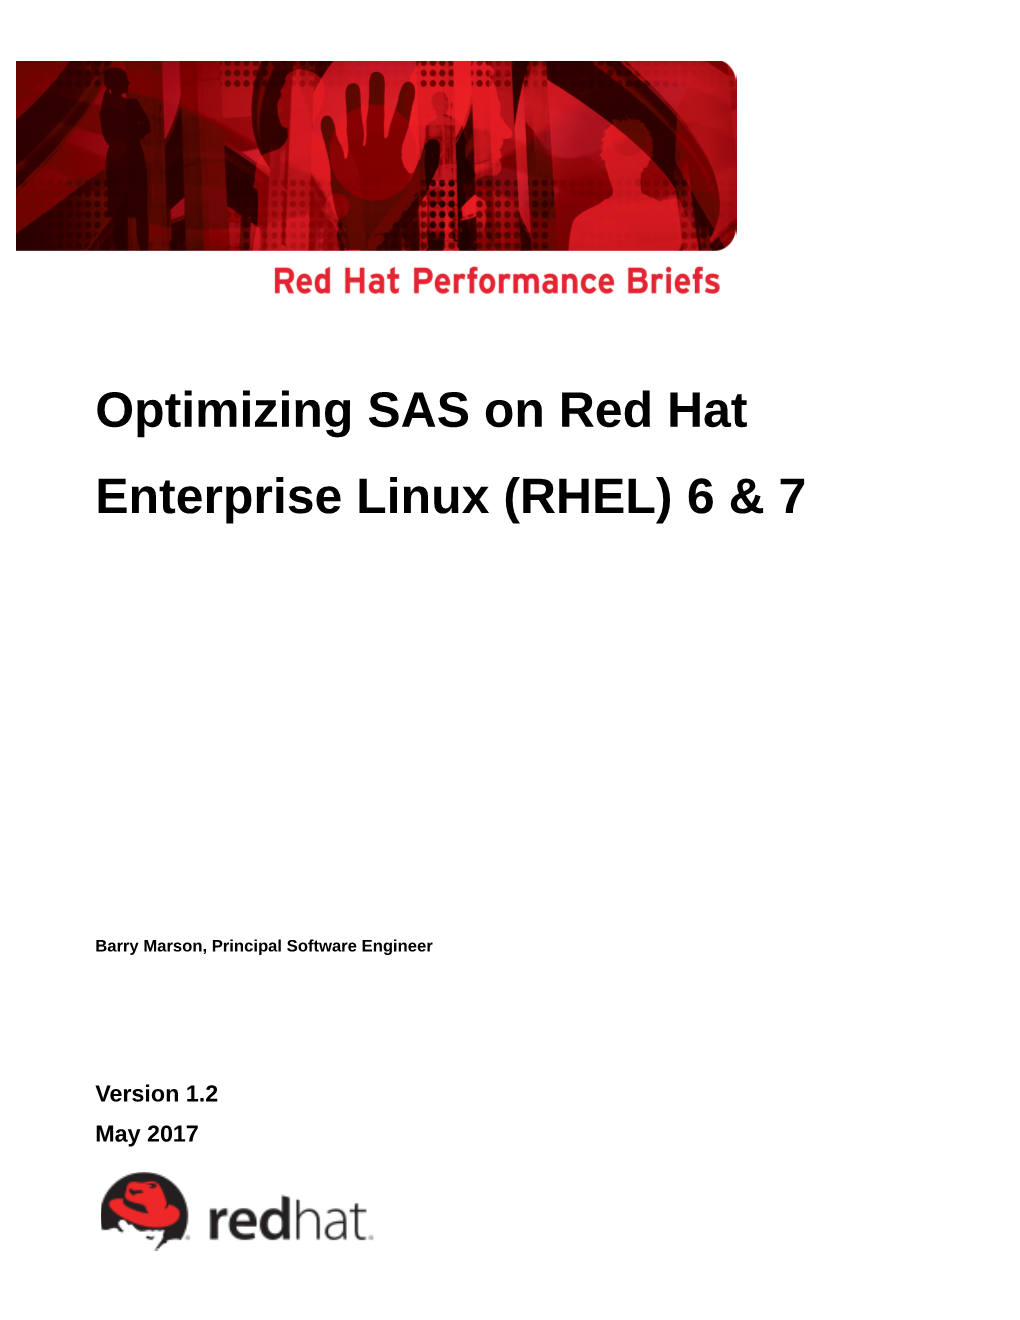 Optimizing SAS on Red Hat Enterprise Linux (RHEL) 6 & 7